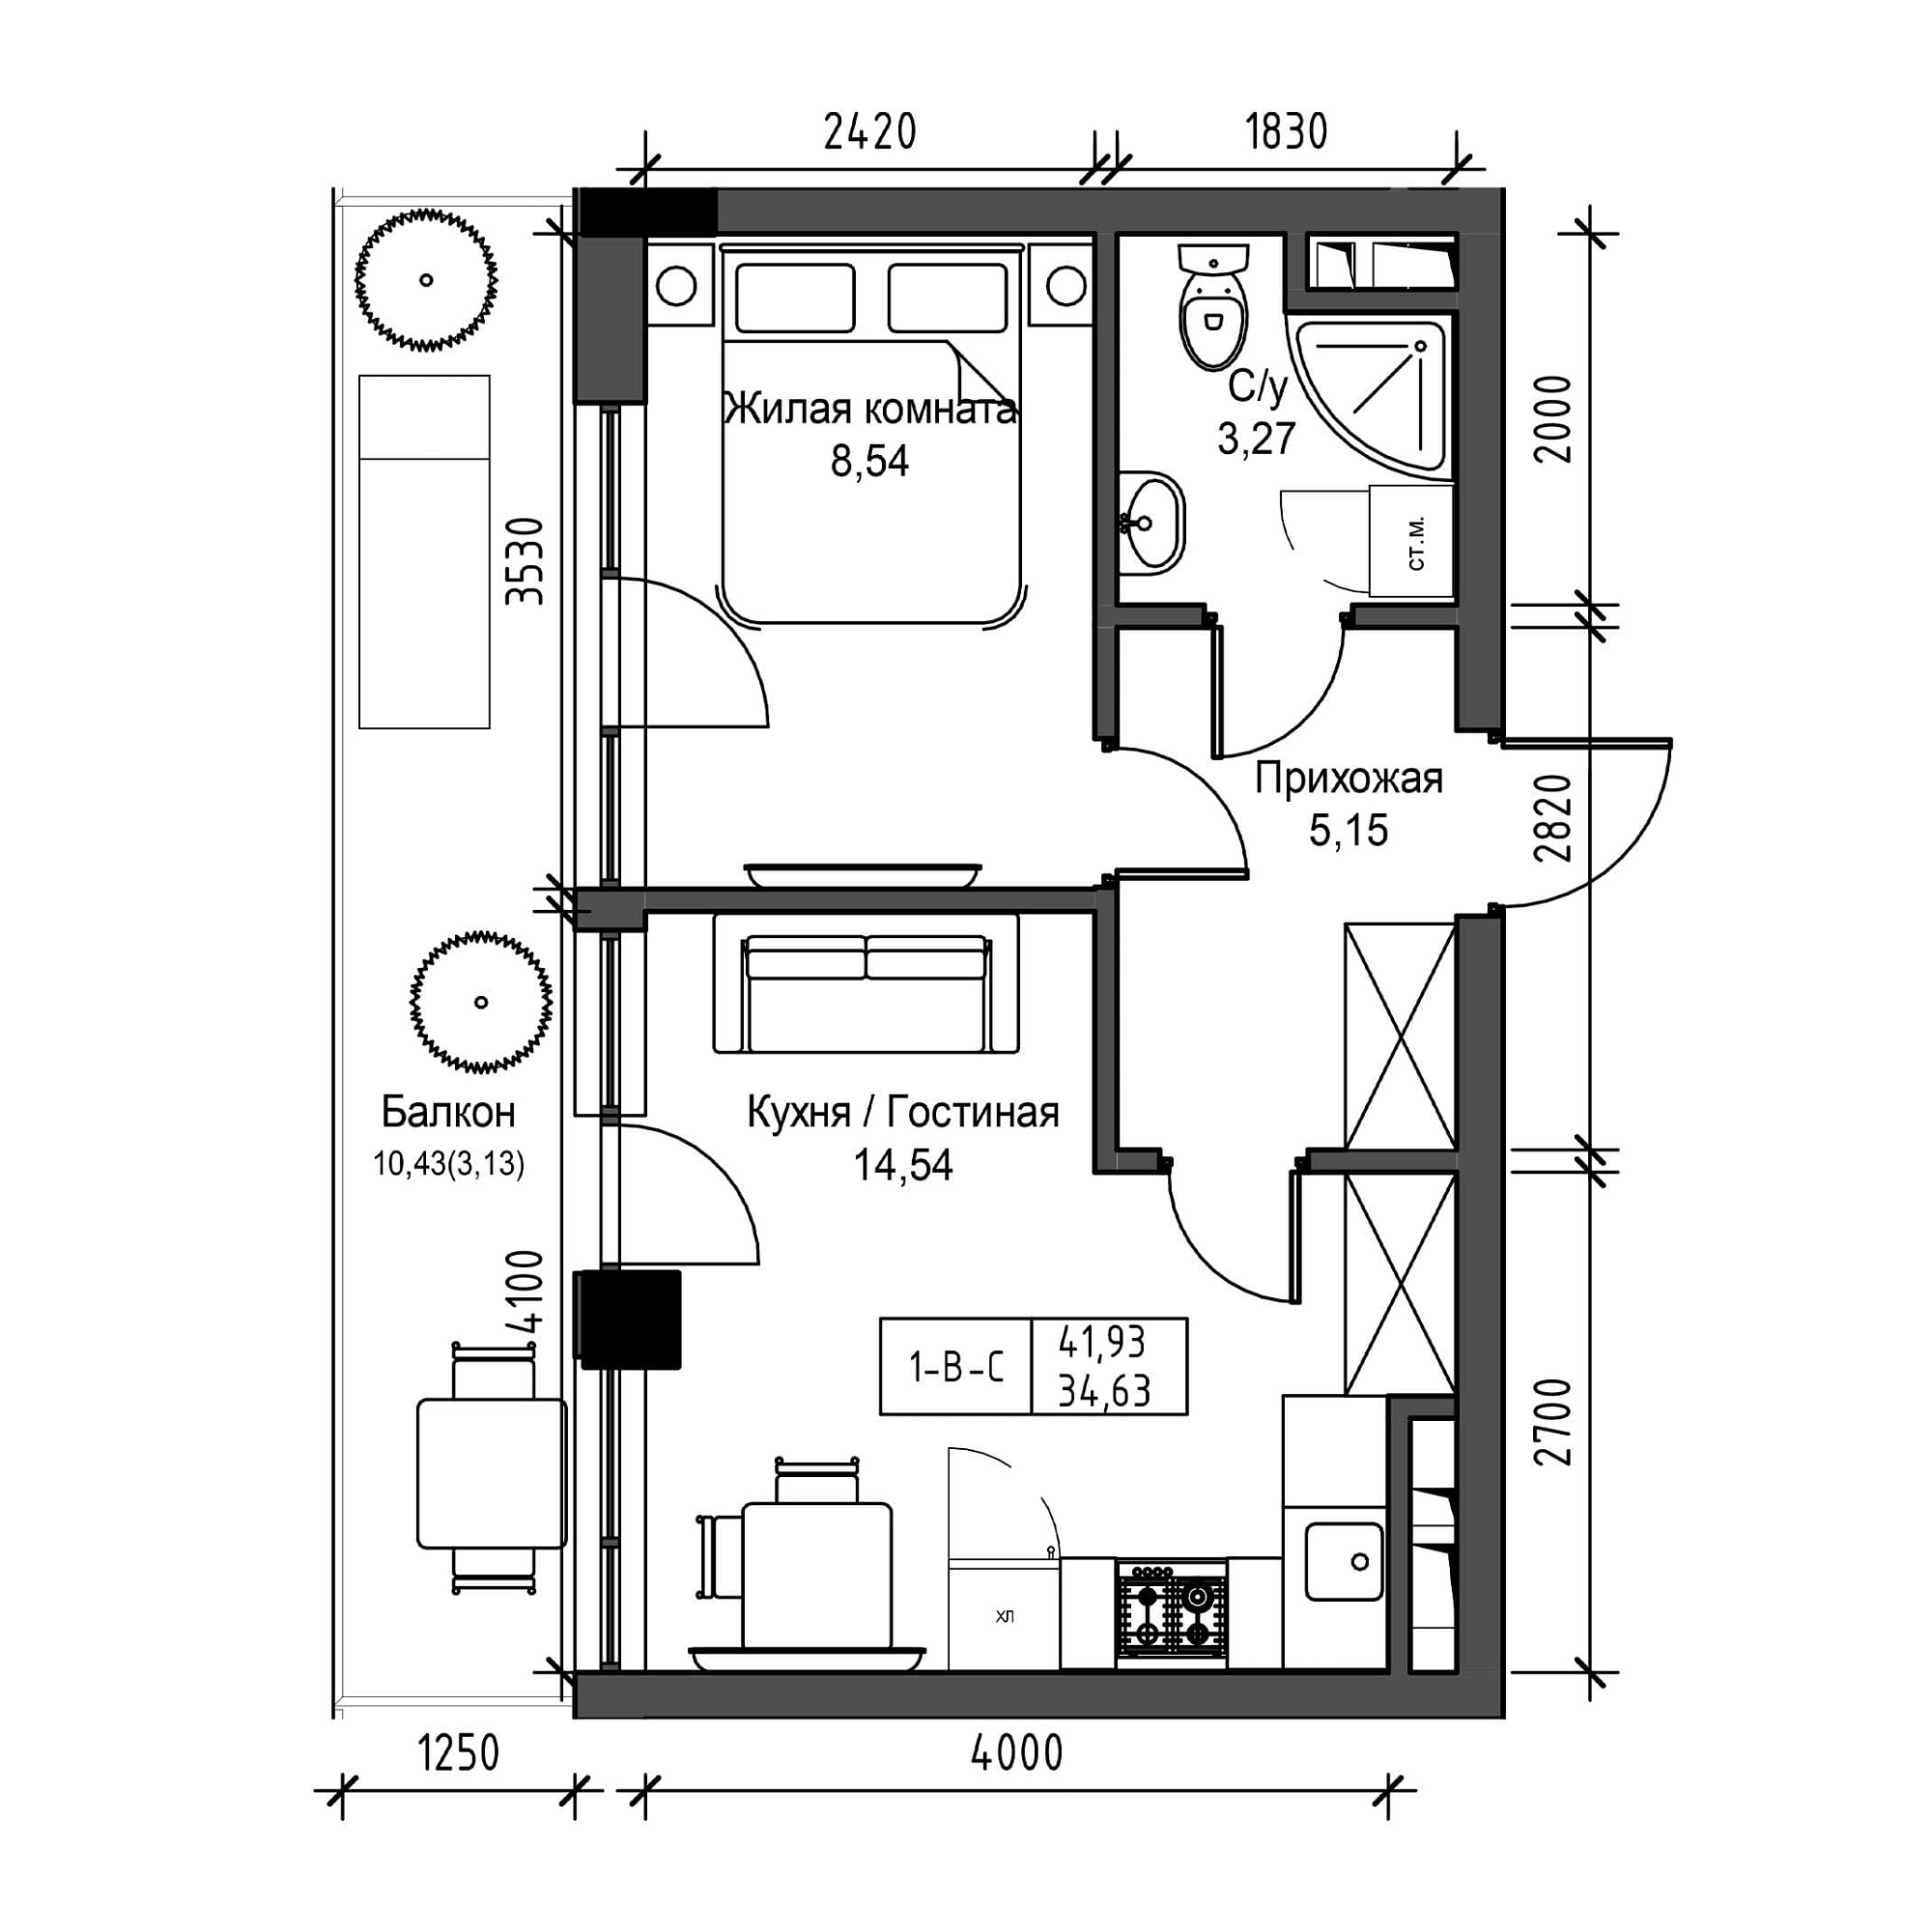 Планування 1-к квартира площею 34.63м2, UM-001-04/0012.